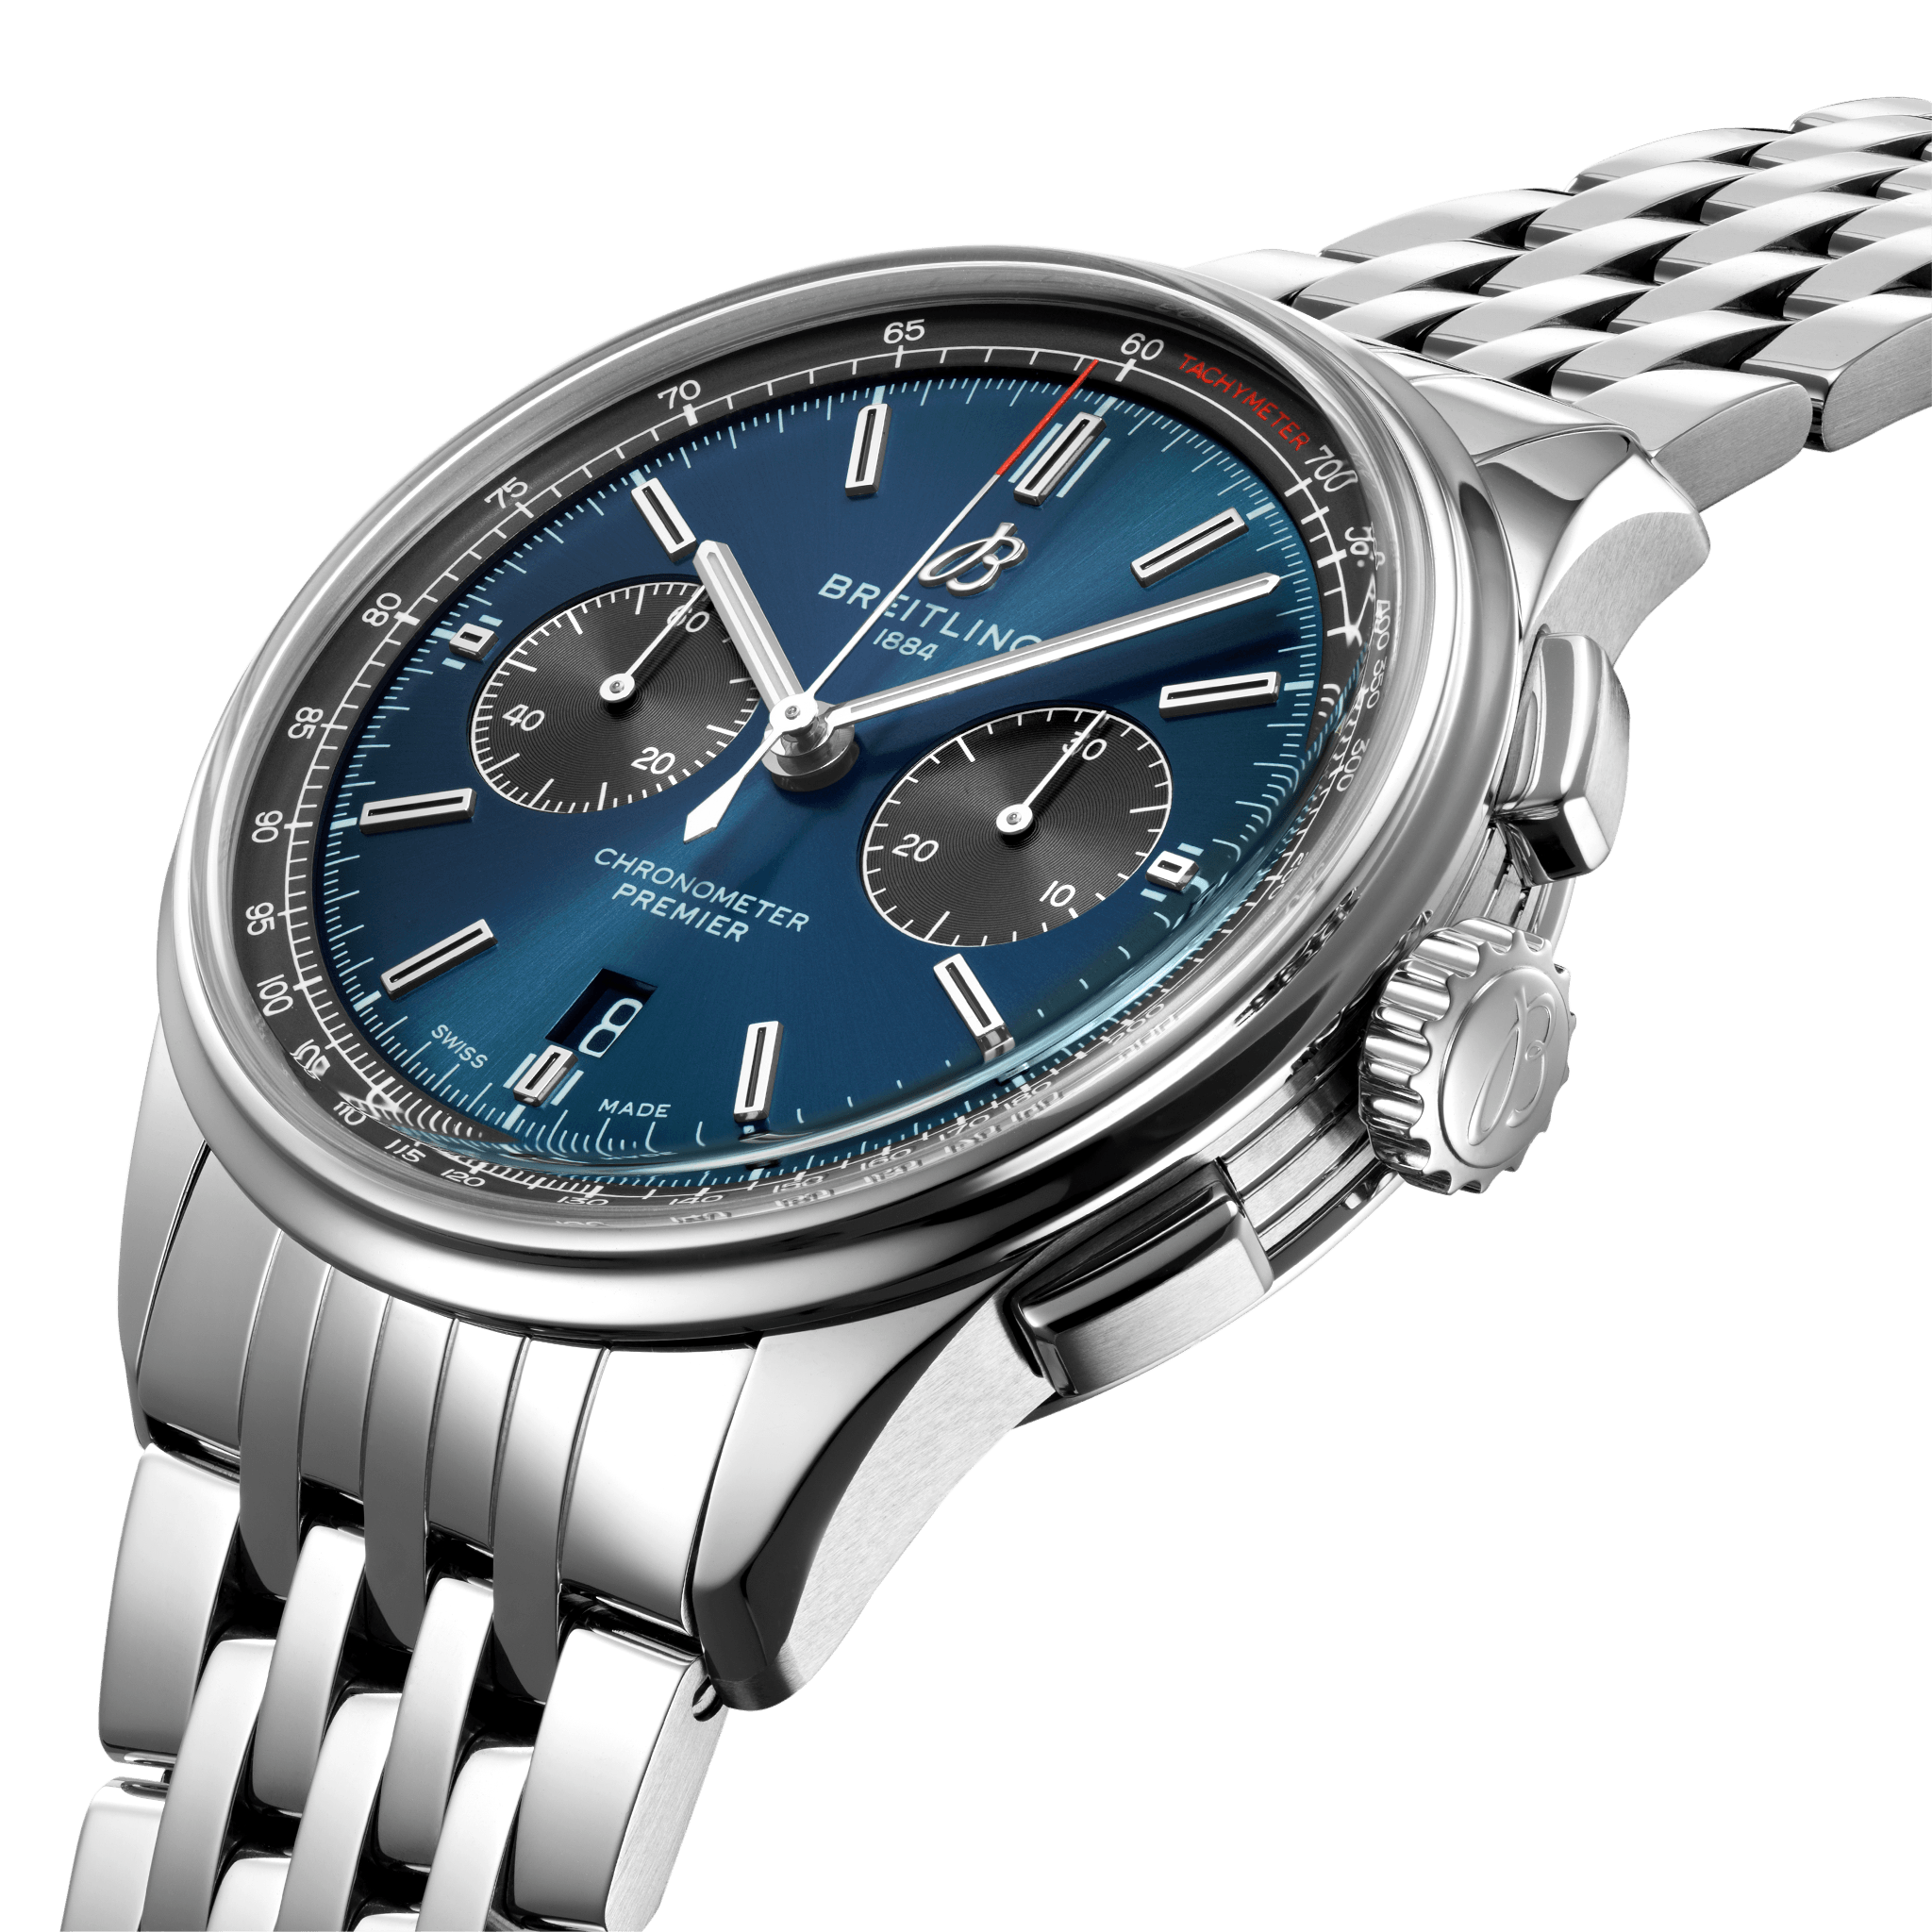 Luxury CHRONOGRAPH PREMIER Watch | BRTLNG Watch 01